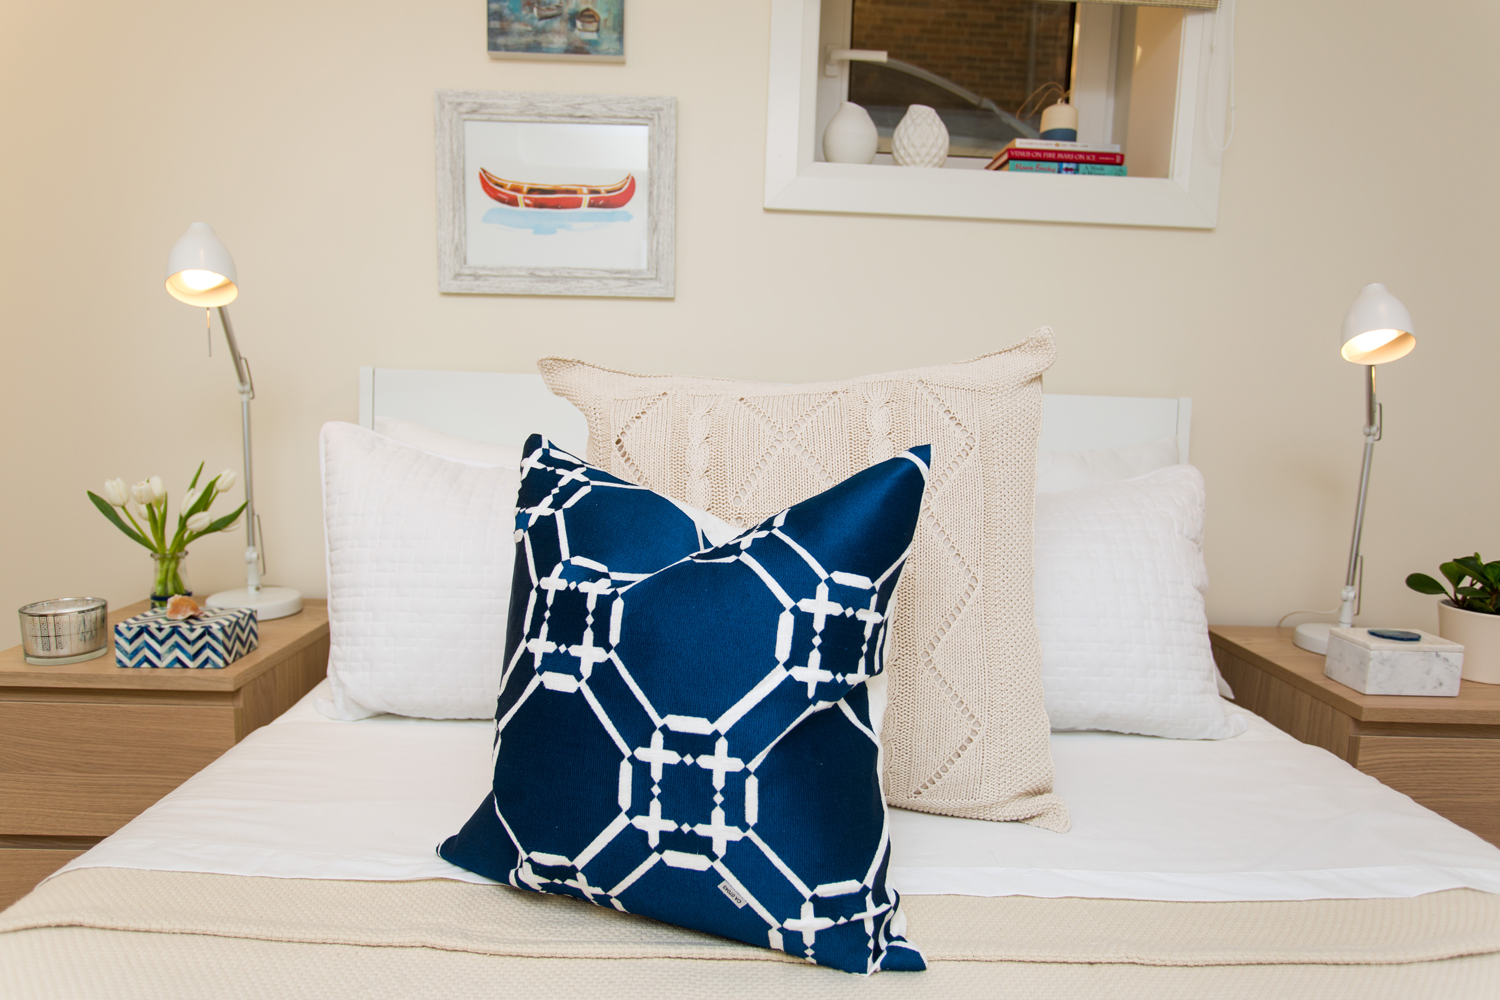 Bright blue printed pillow on cream bedding